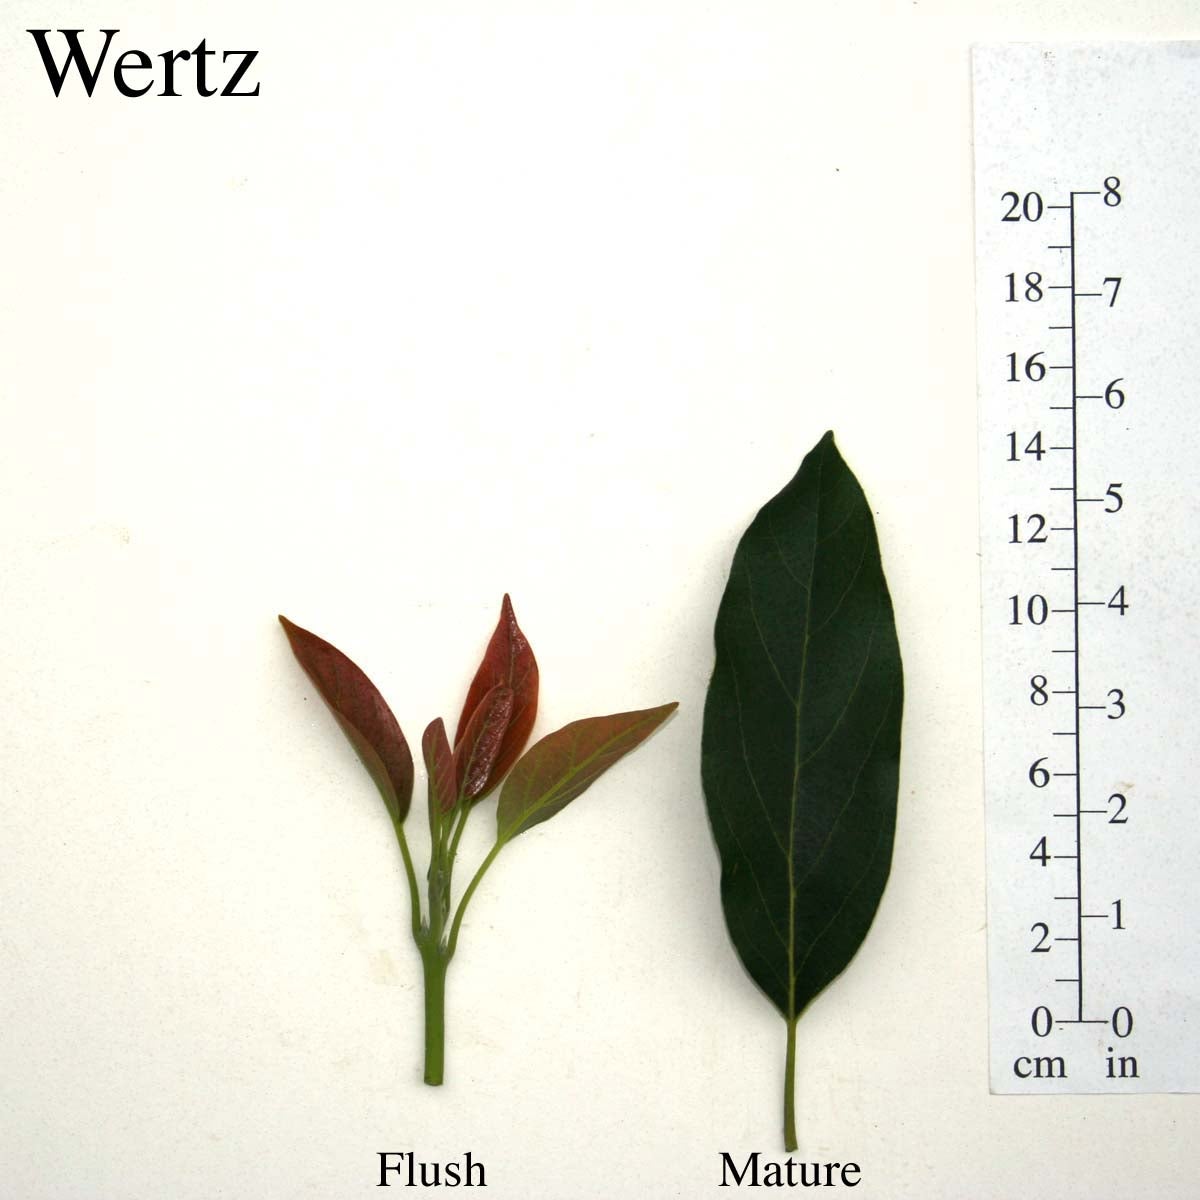 Wertz Leaves